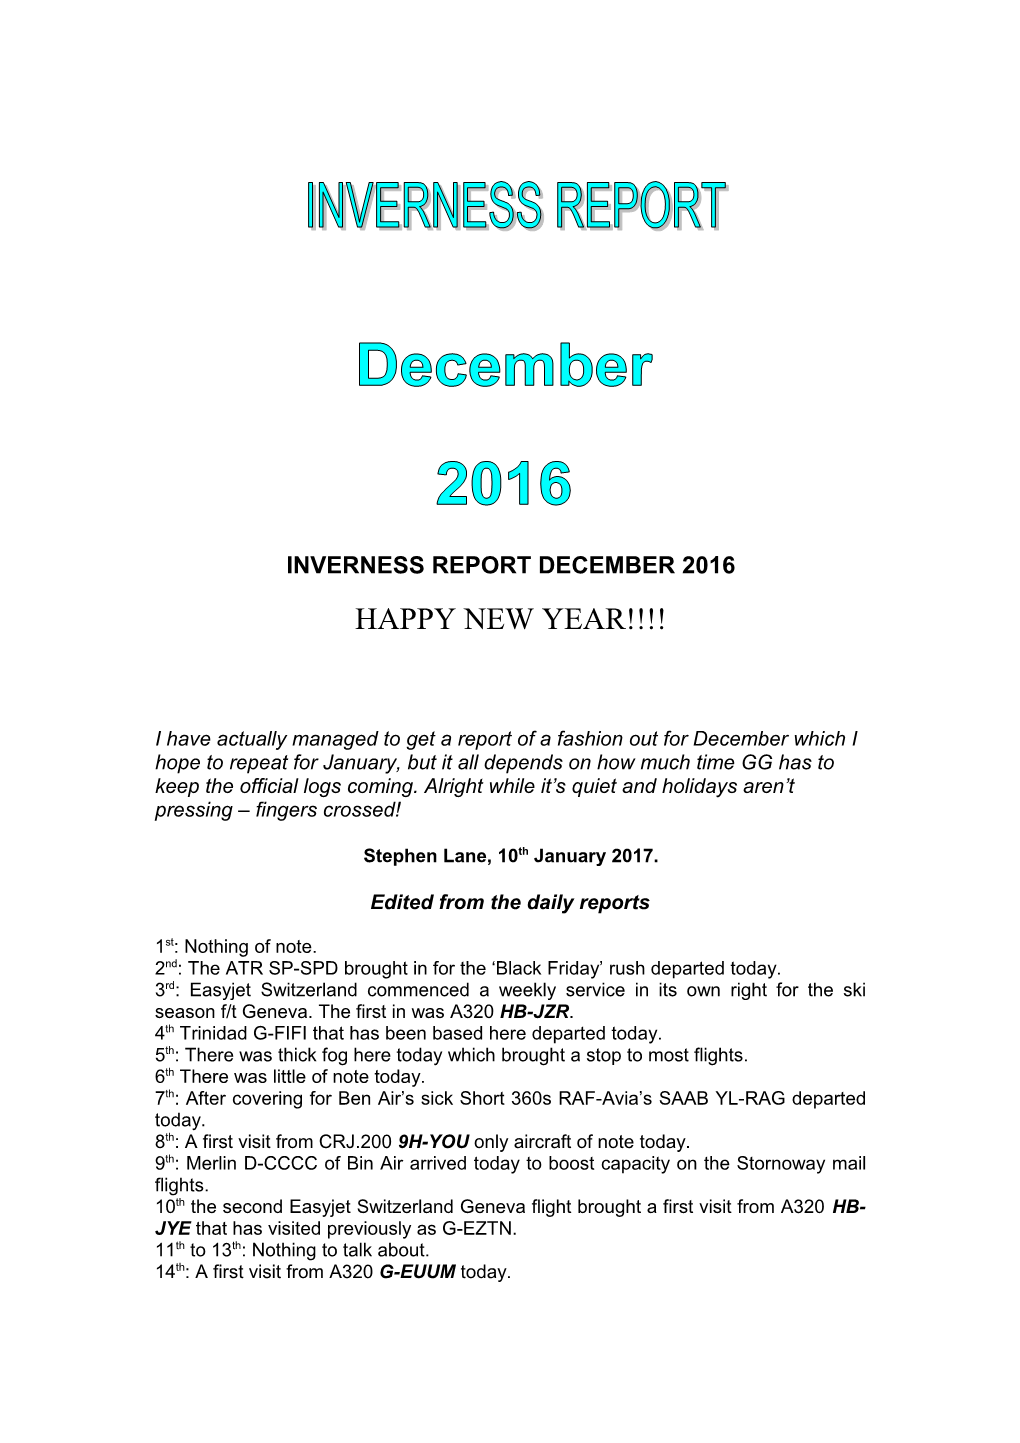 Inverness Report December 2016